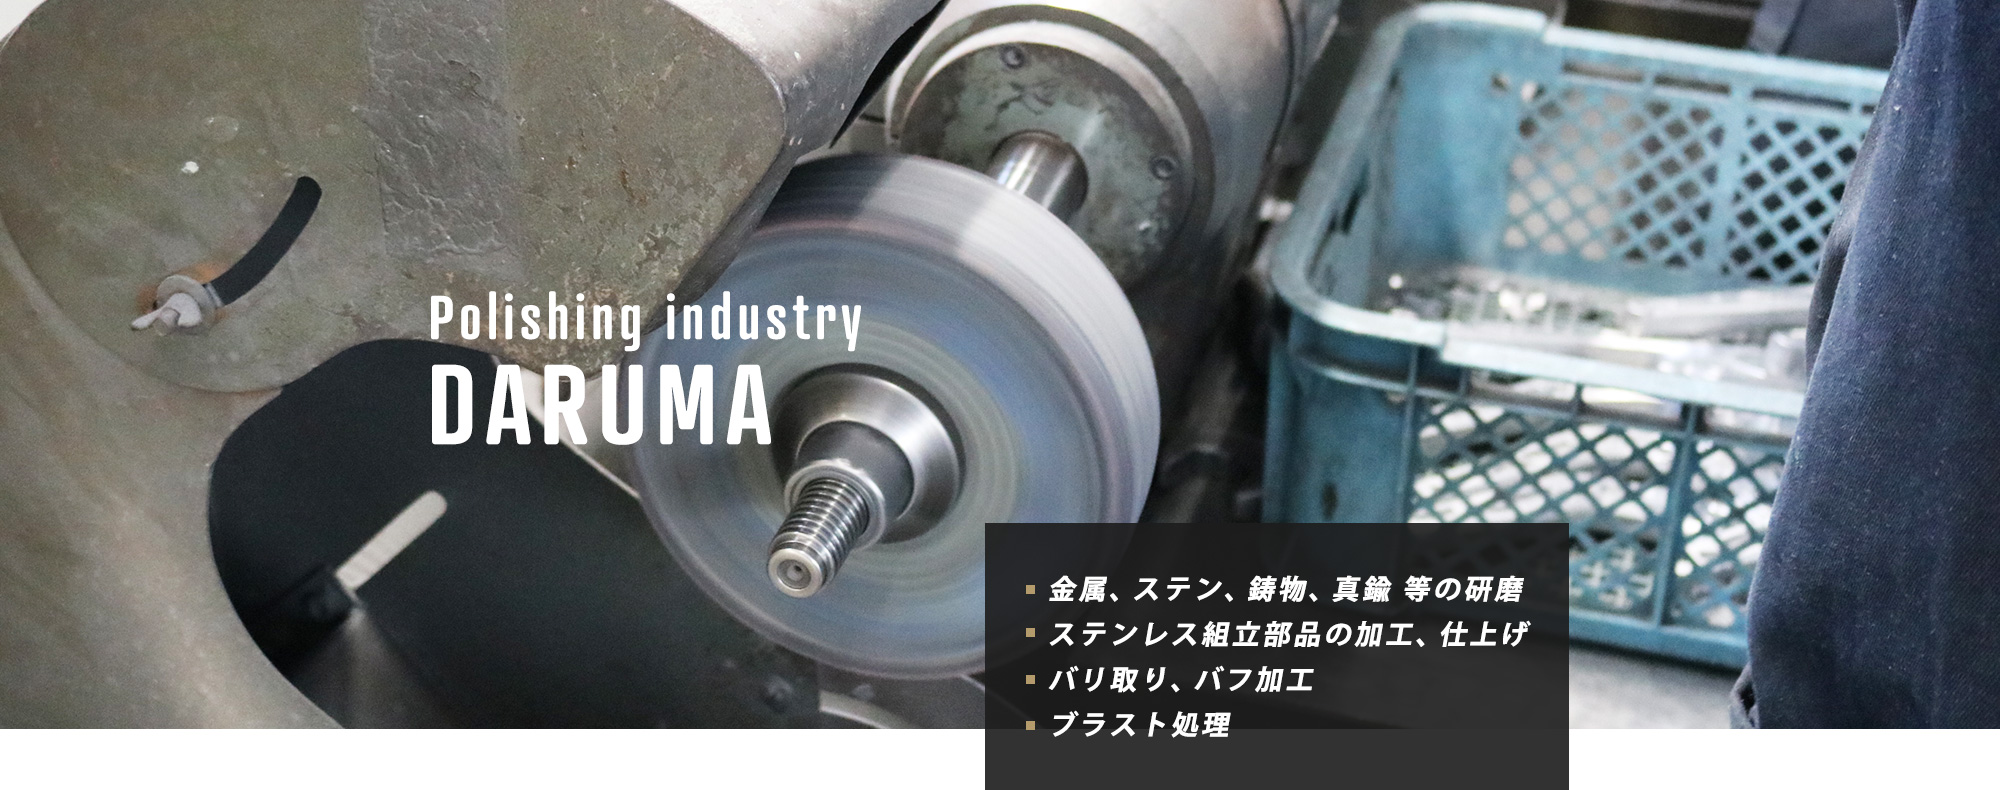 Polishing industry DARUMA　金属、ステン、鋳物、真鍮 等の研磨/ステンレス組立部品の加工、仕上げ/バリ取り、バフ加工/ブラスト処理